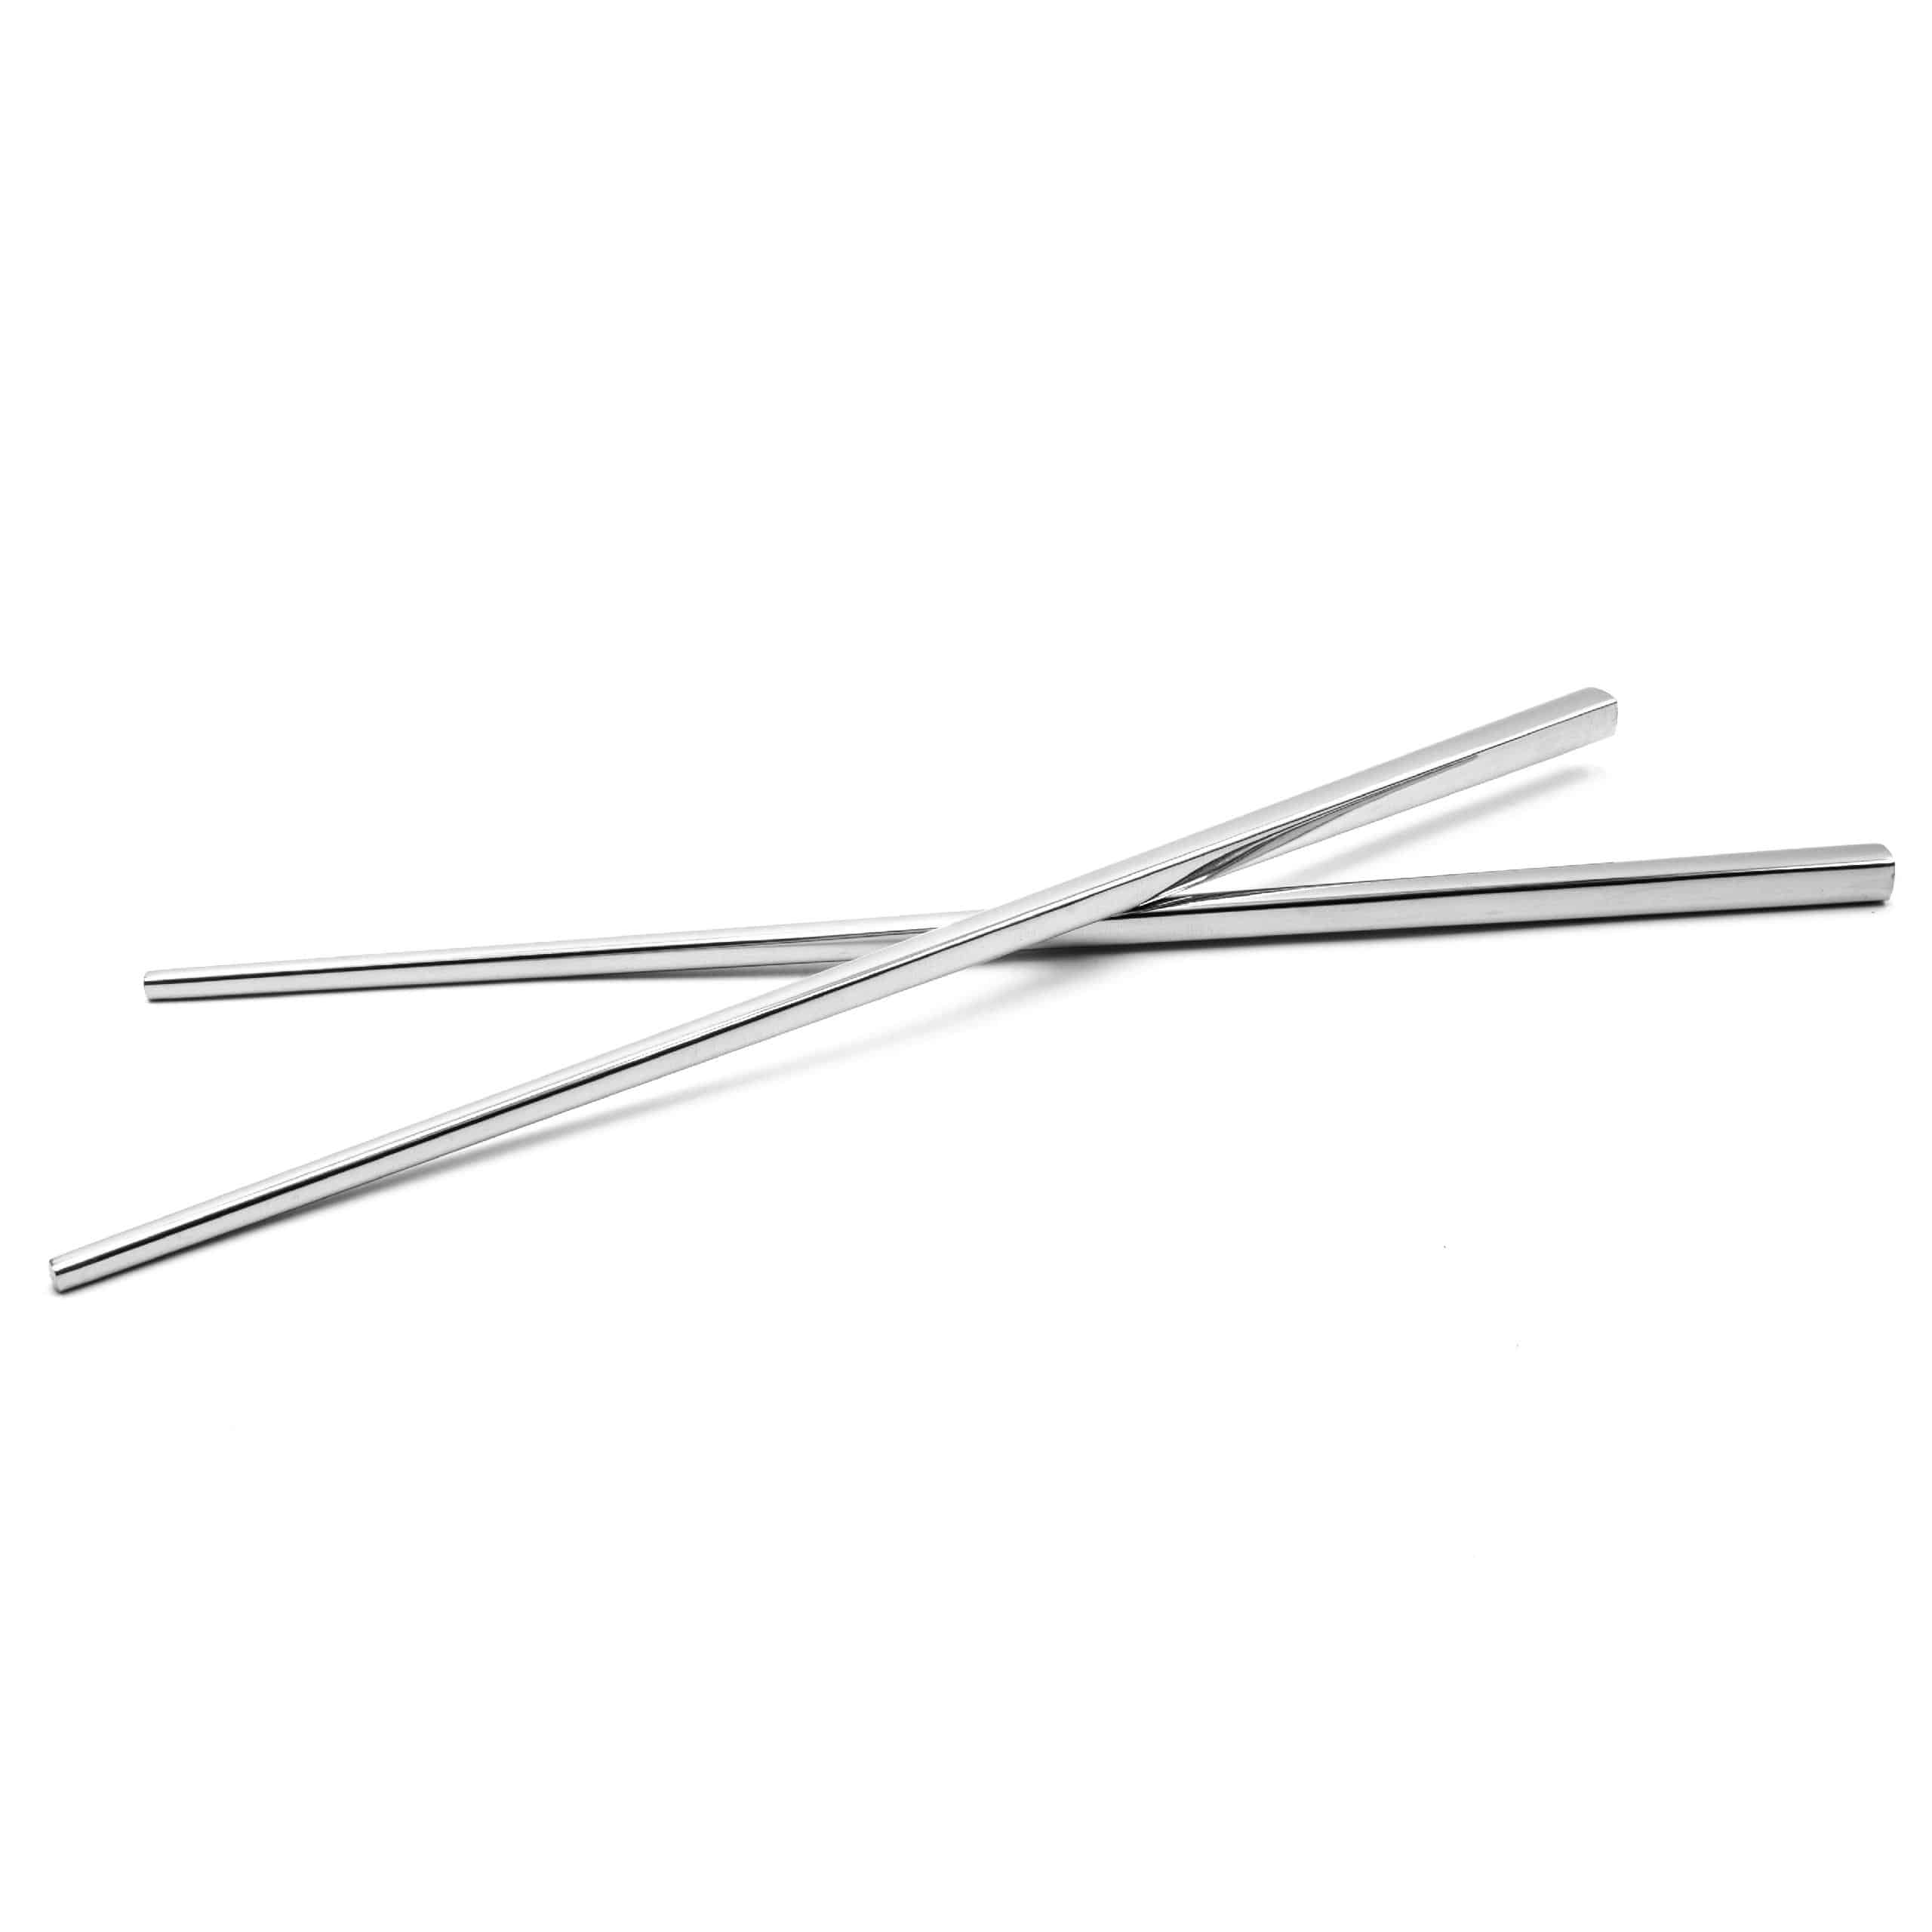 Chopstick Set (1 Pair) - Stainless Steel, silver, 23 cm long, Reusable